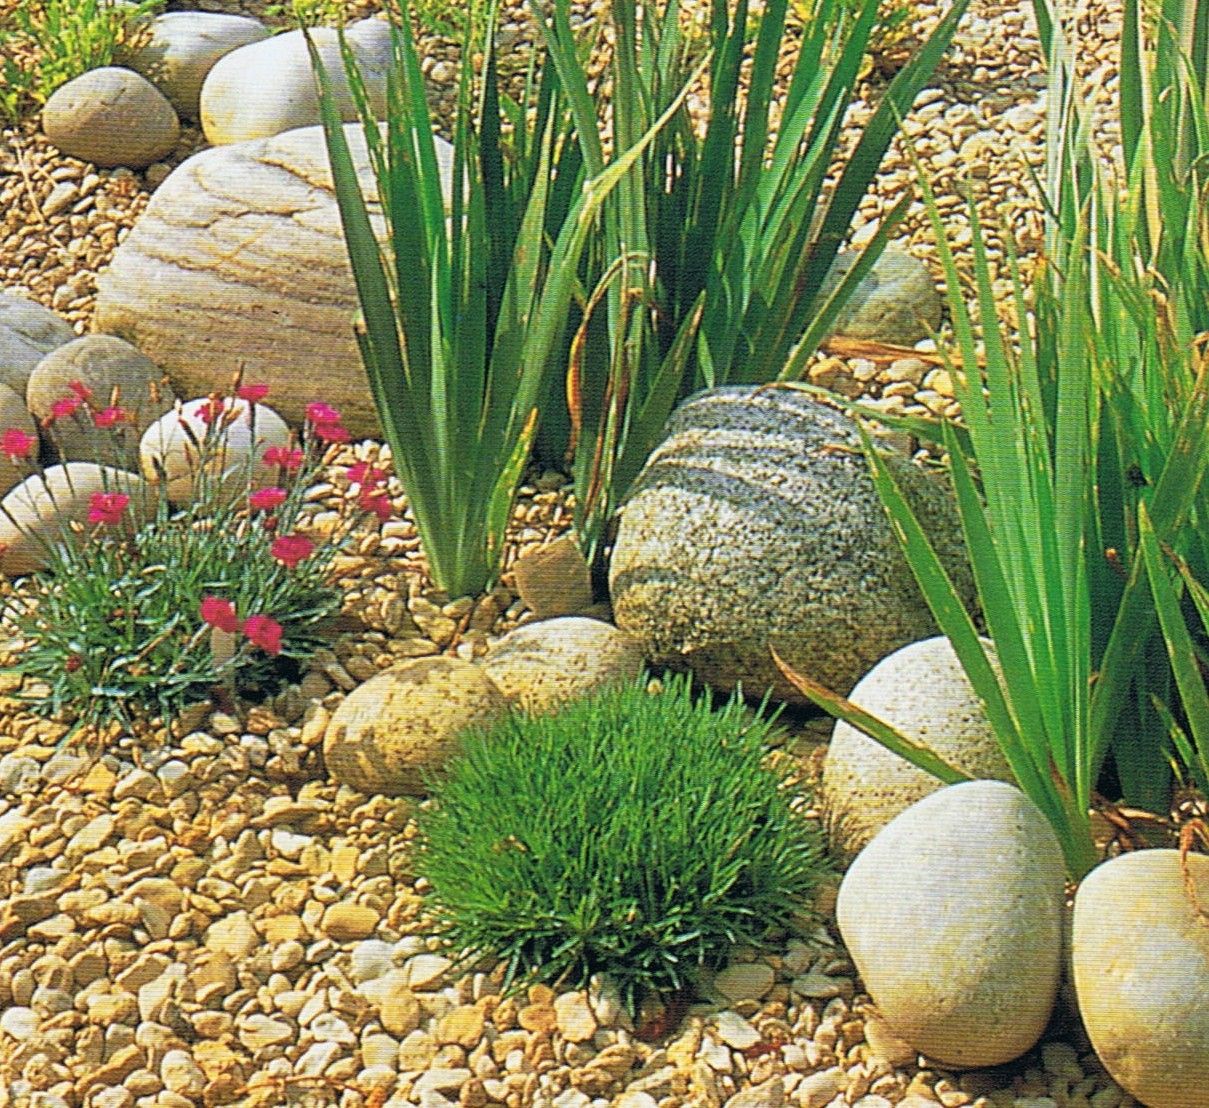 The Best Gravel Gardens Design Ideas